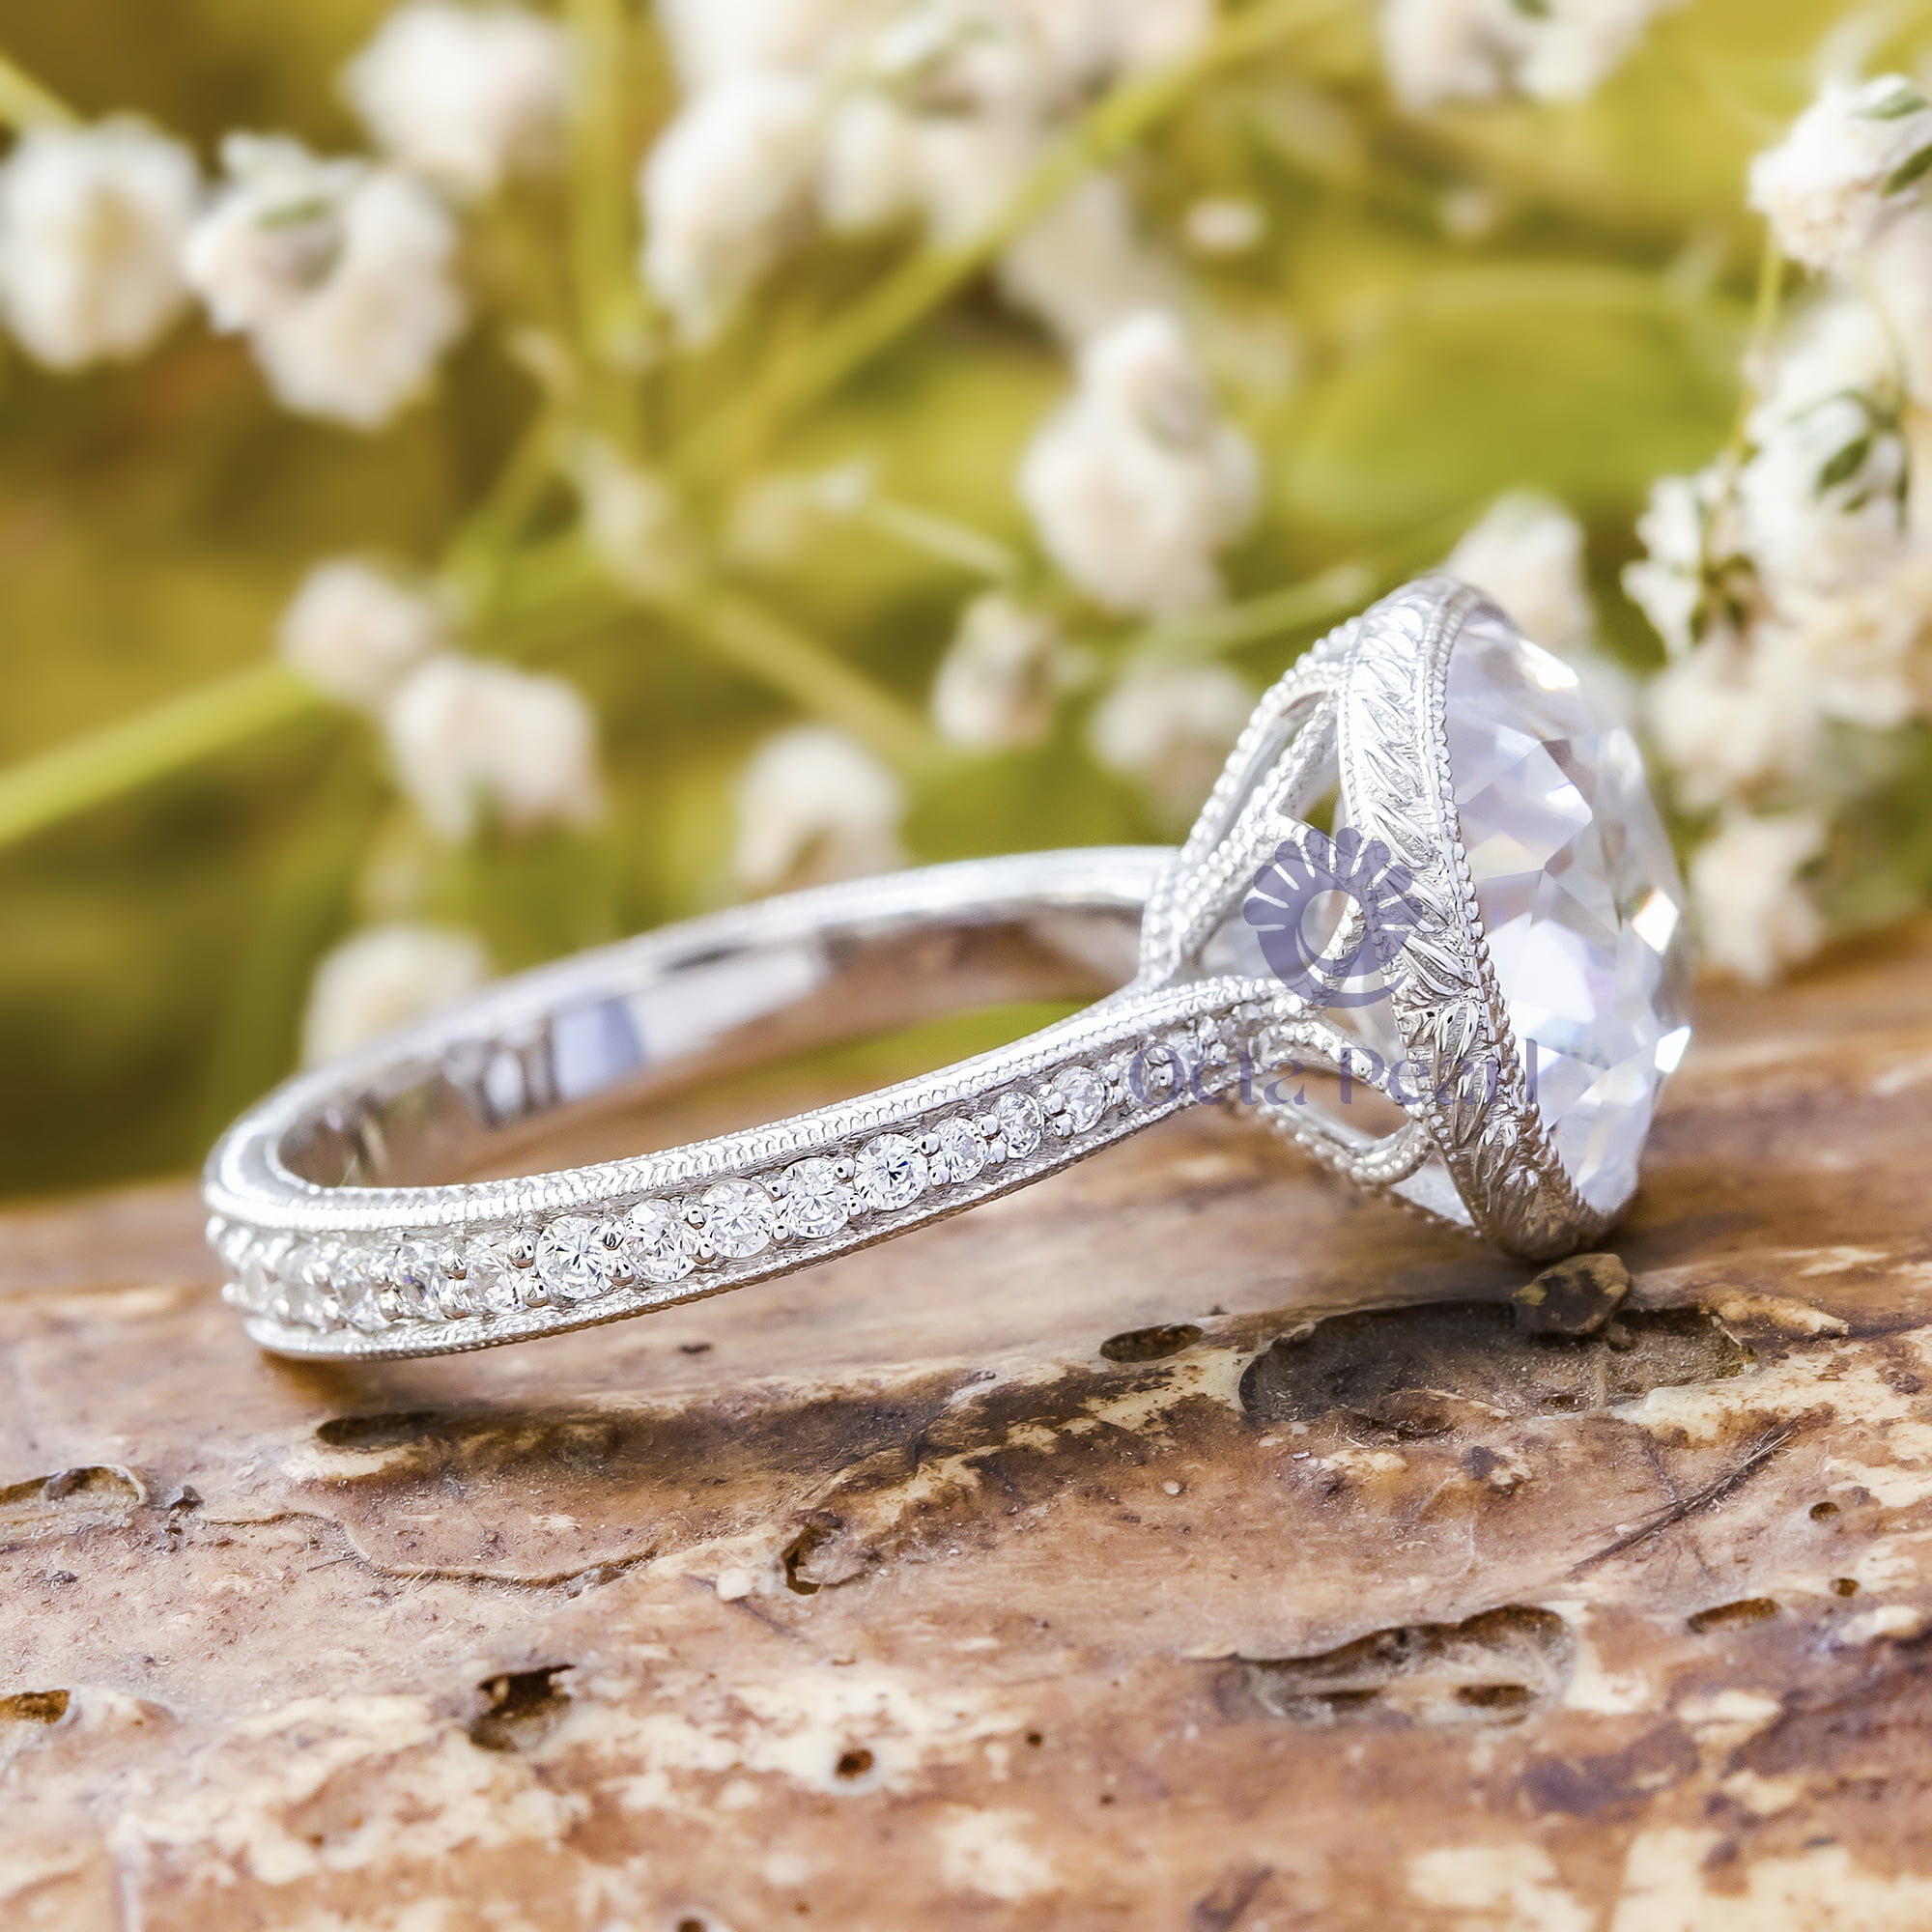 12 MM Old Mine Cut CZ Stone Milgrain Bezel Set Art Deco Wedding Ring For Women